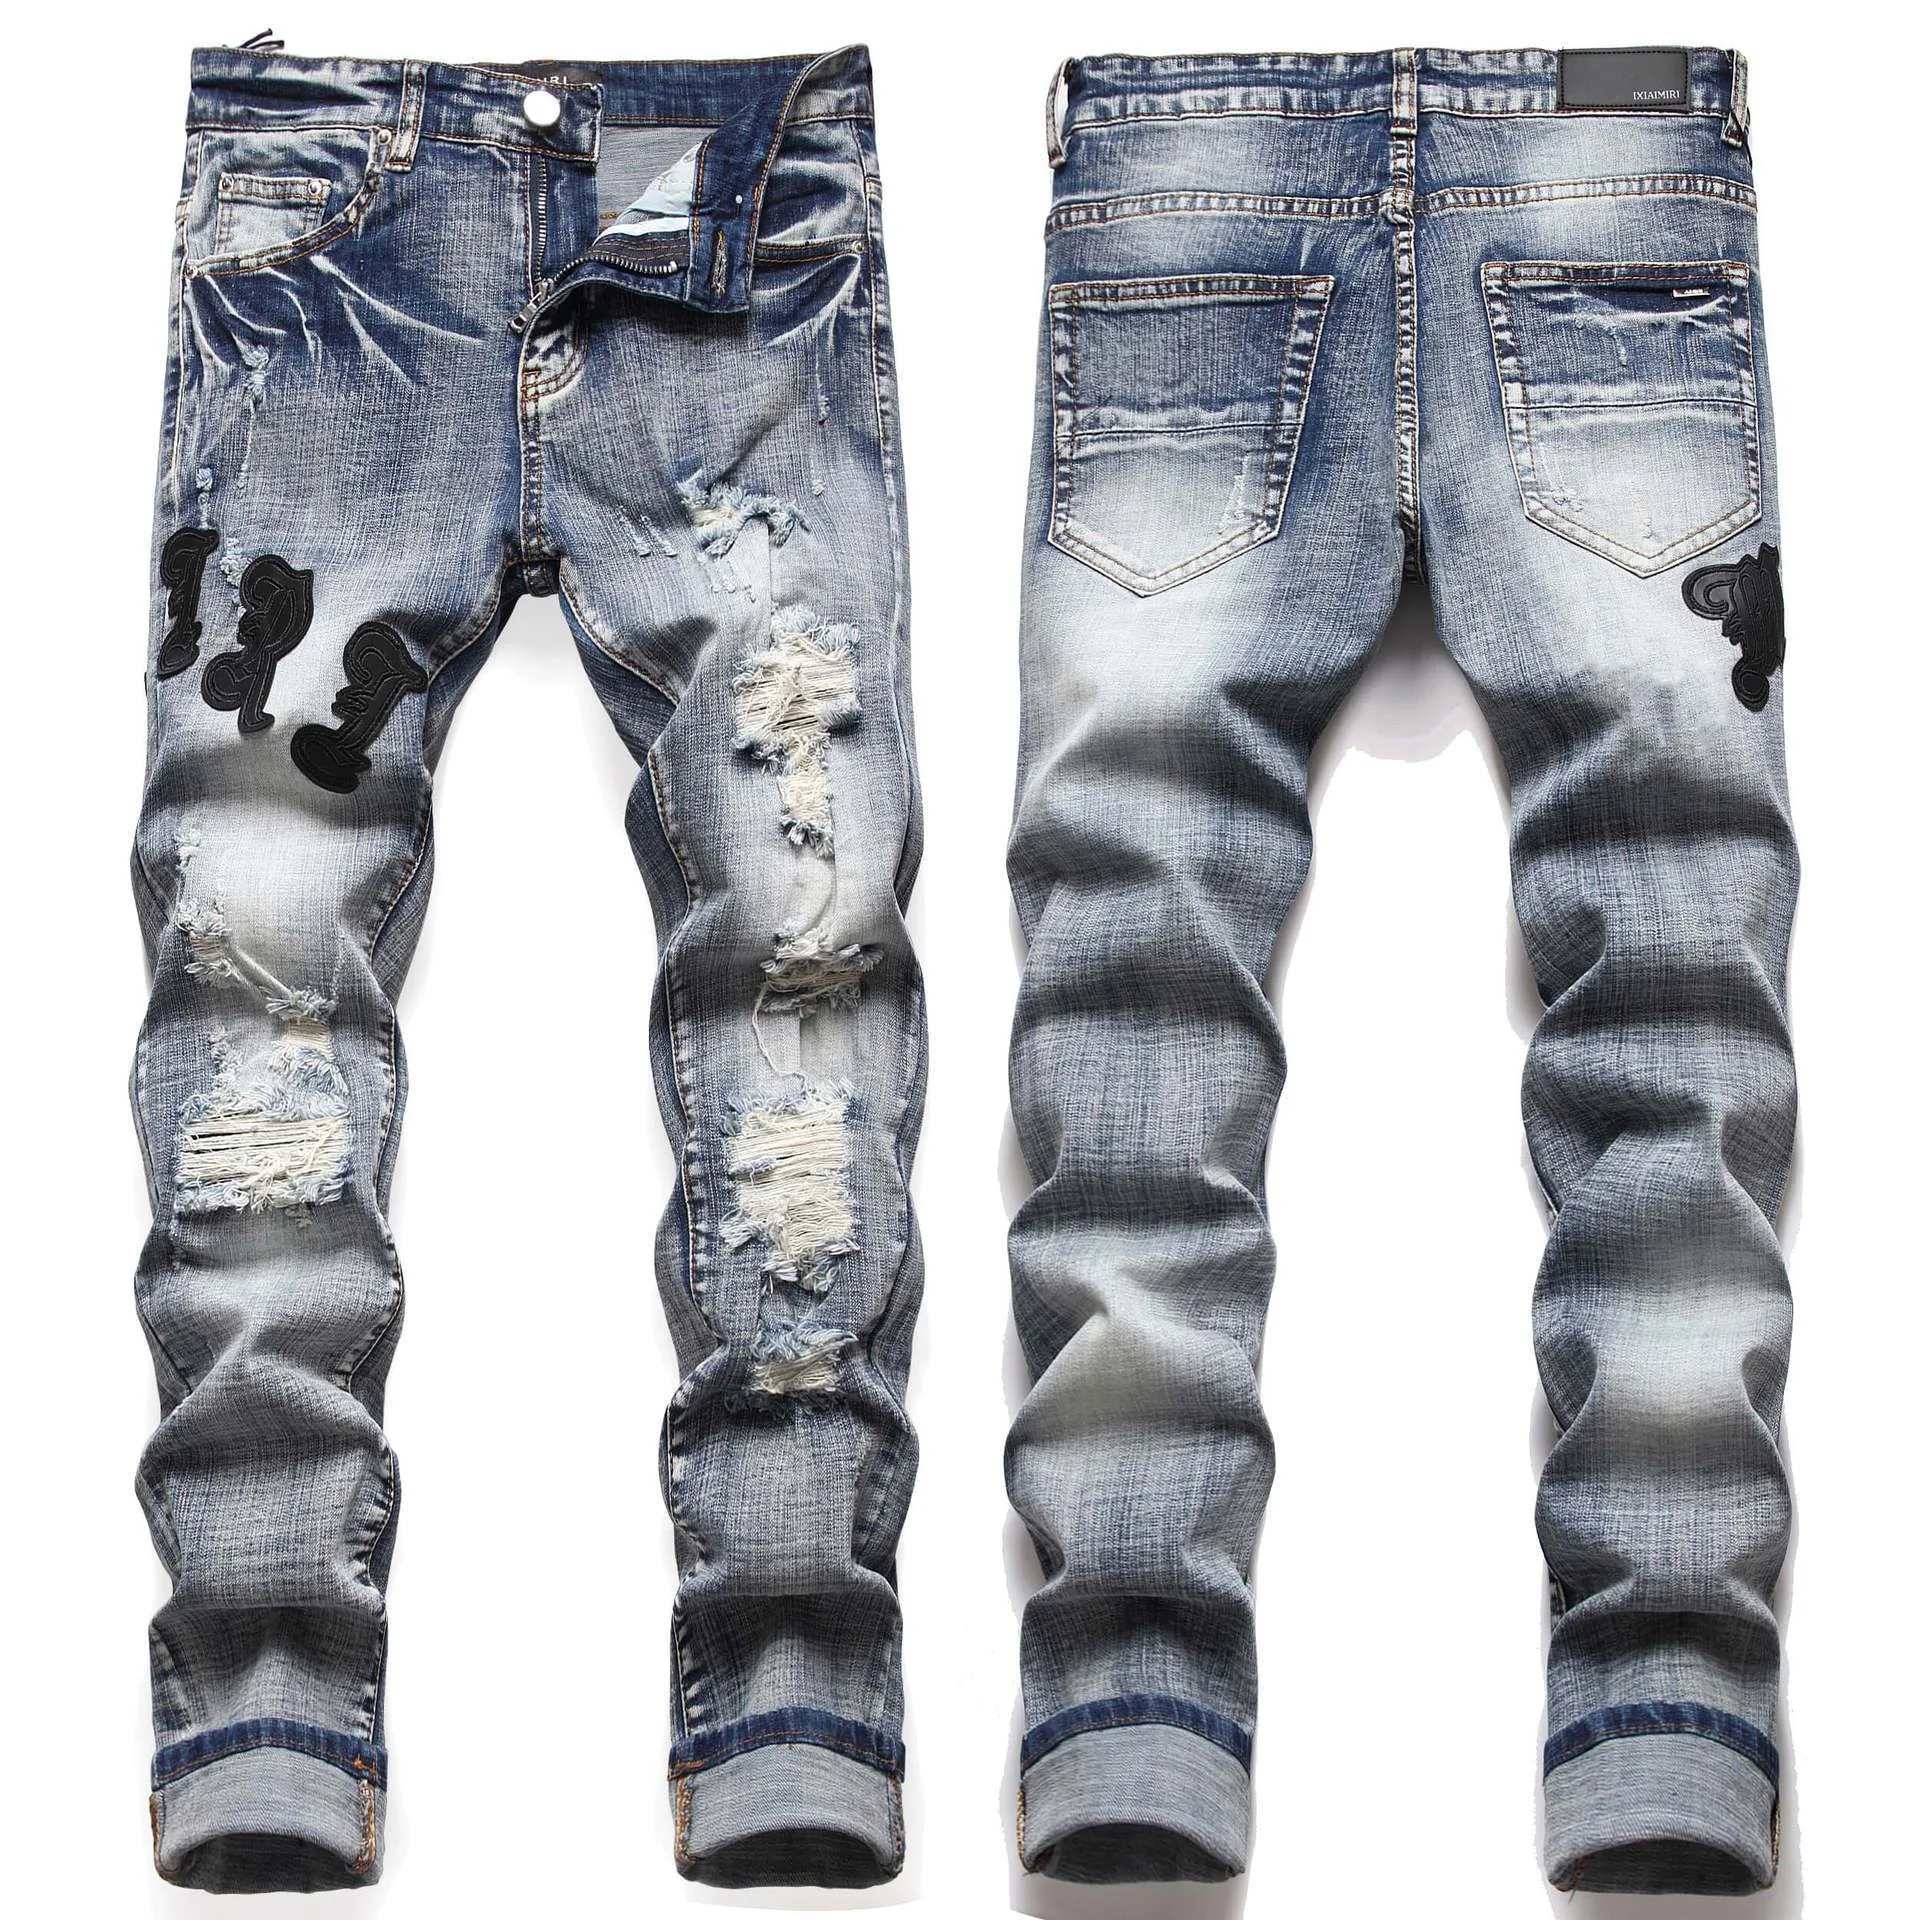 

Light Luxury Men’s Street Fashion Blue Jeans,Korea Version Slim-fit Hip Hop Denim Pants ,Trendy Hole Ripped Casual Jeans Pants;